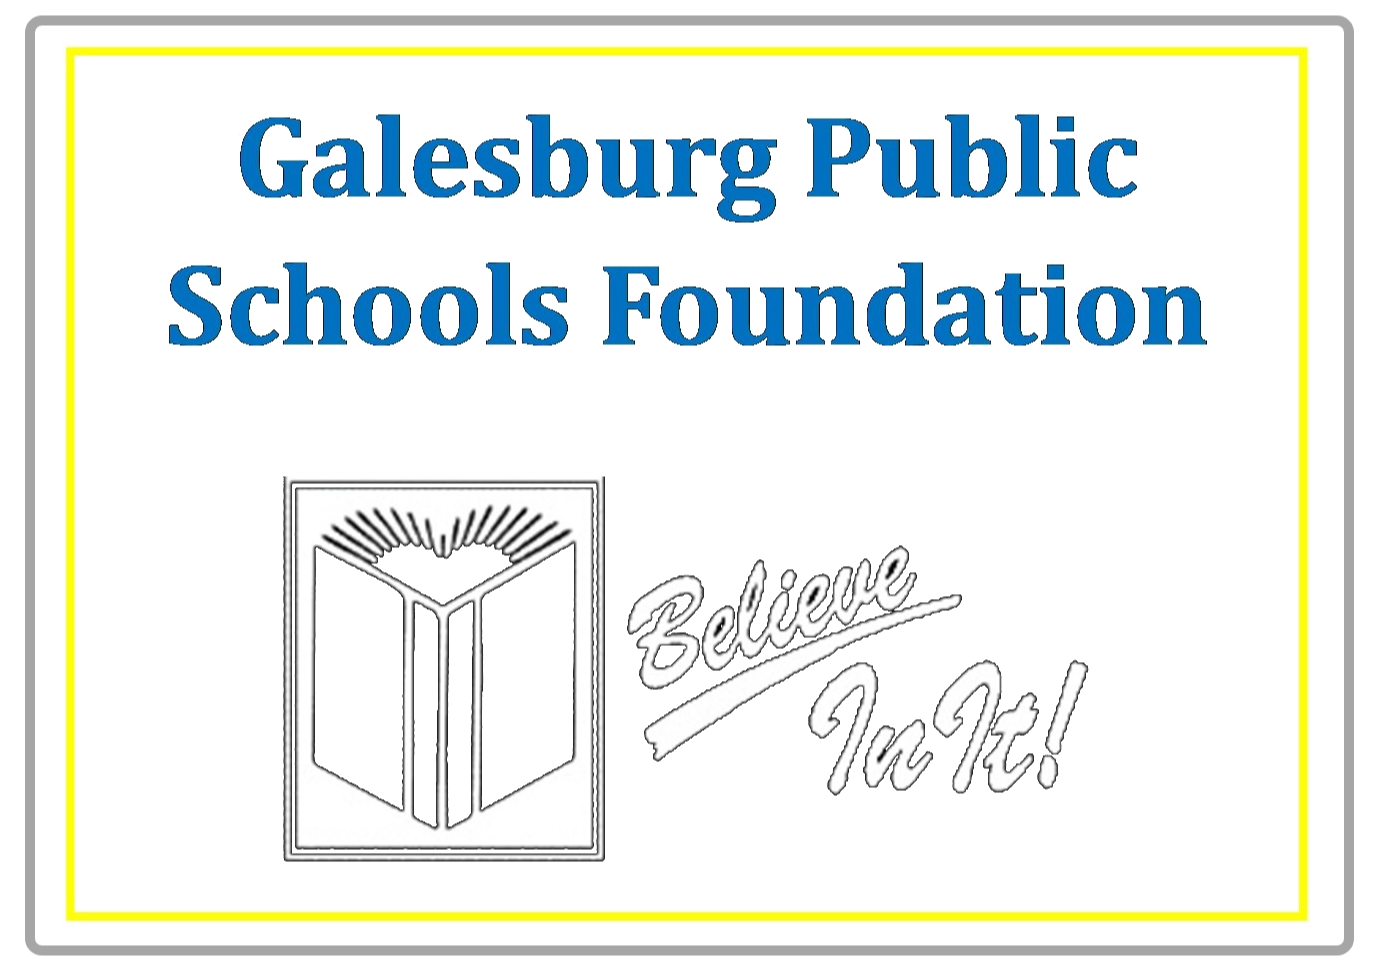 Galesburg Public Schools Foundation 